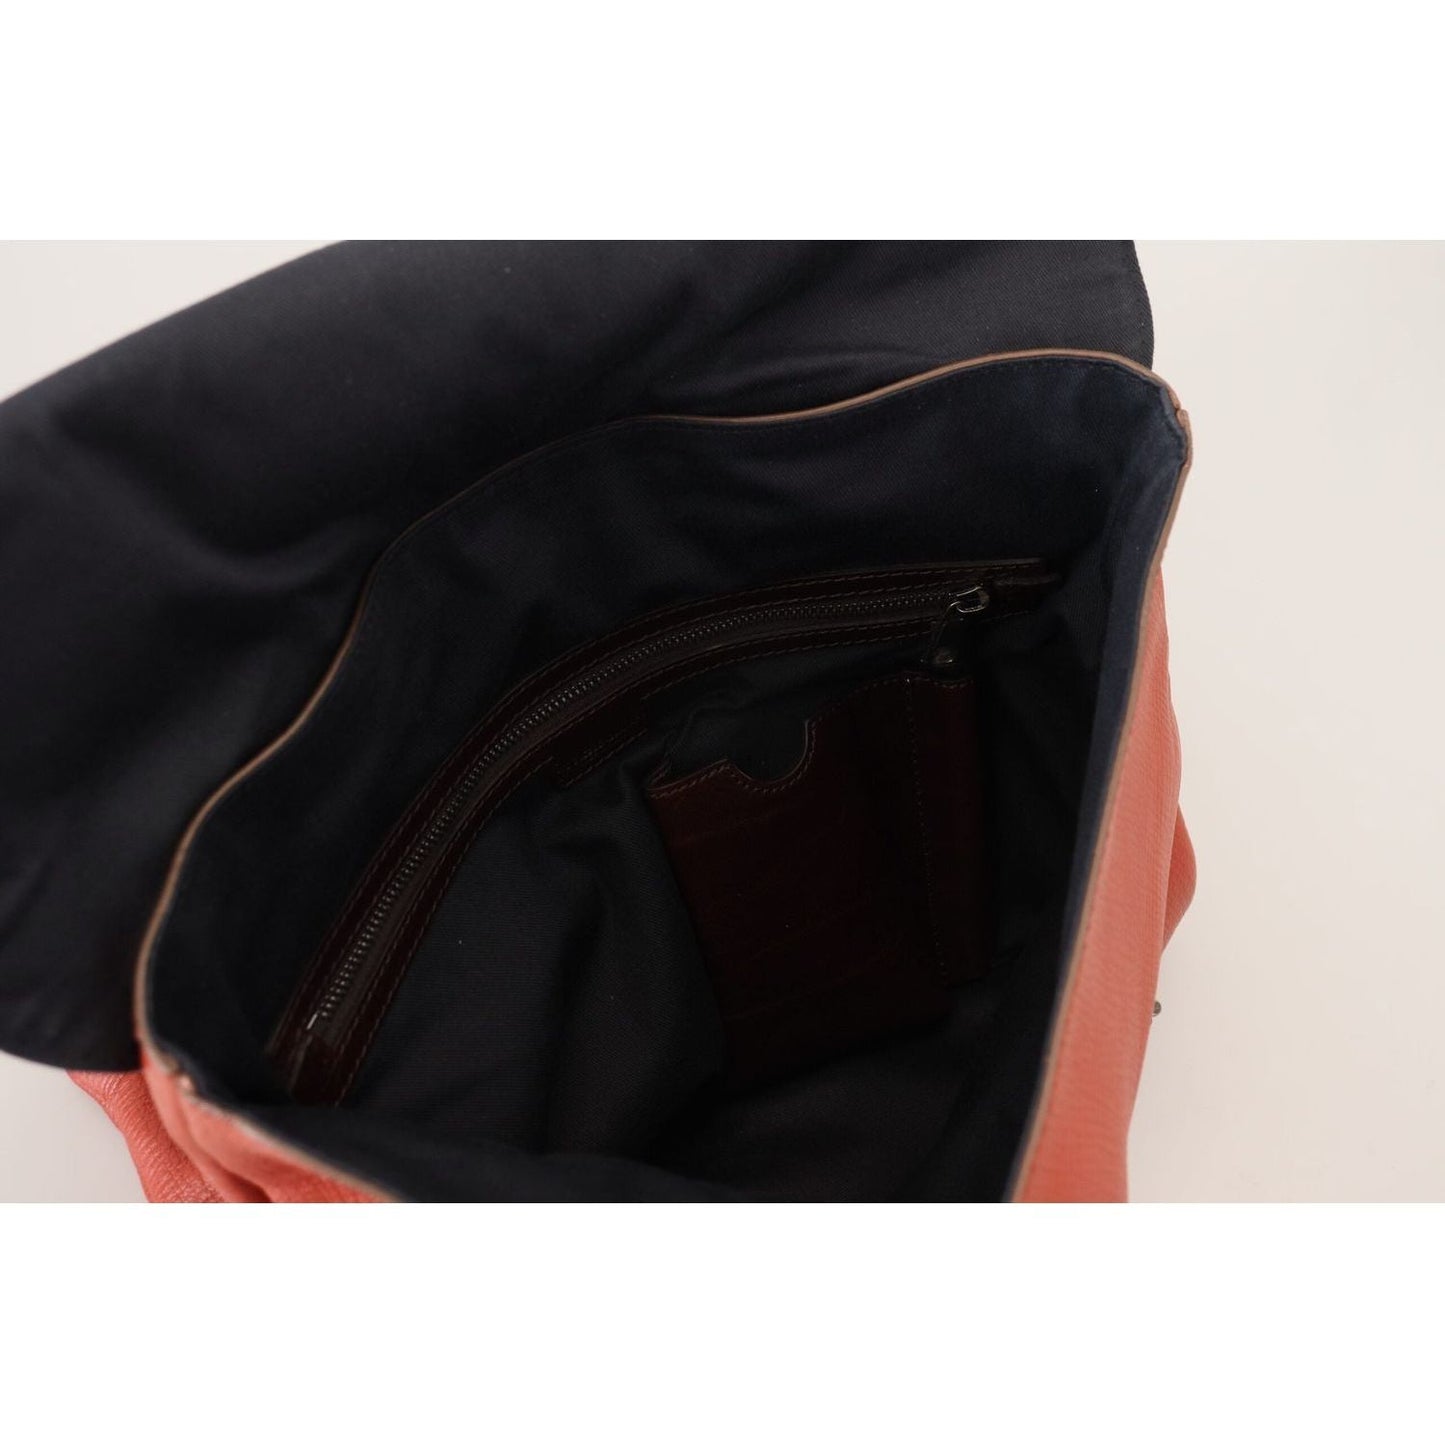 Dolce & GabbanaElegant Calfskin Leather Backpack in OrangeMcRichard Designer Brands£819.00